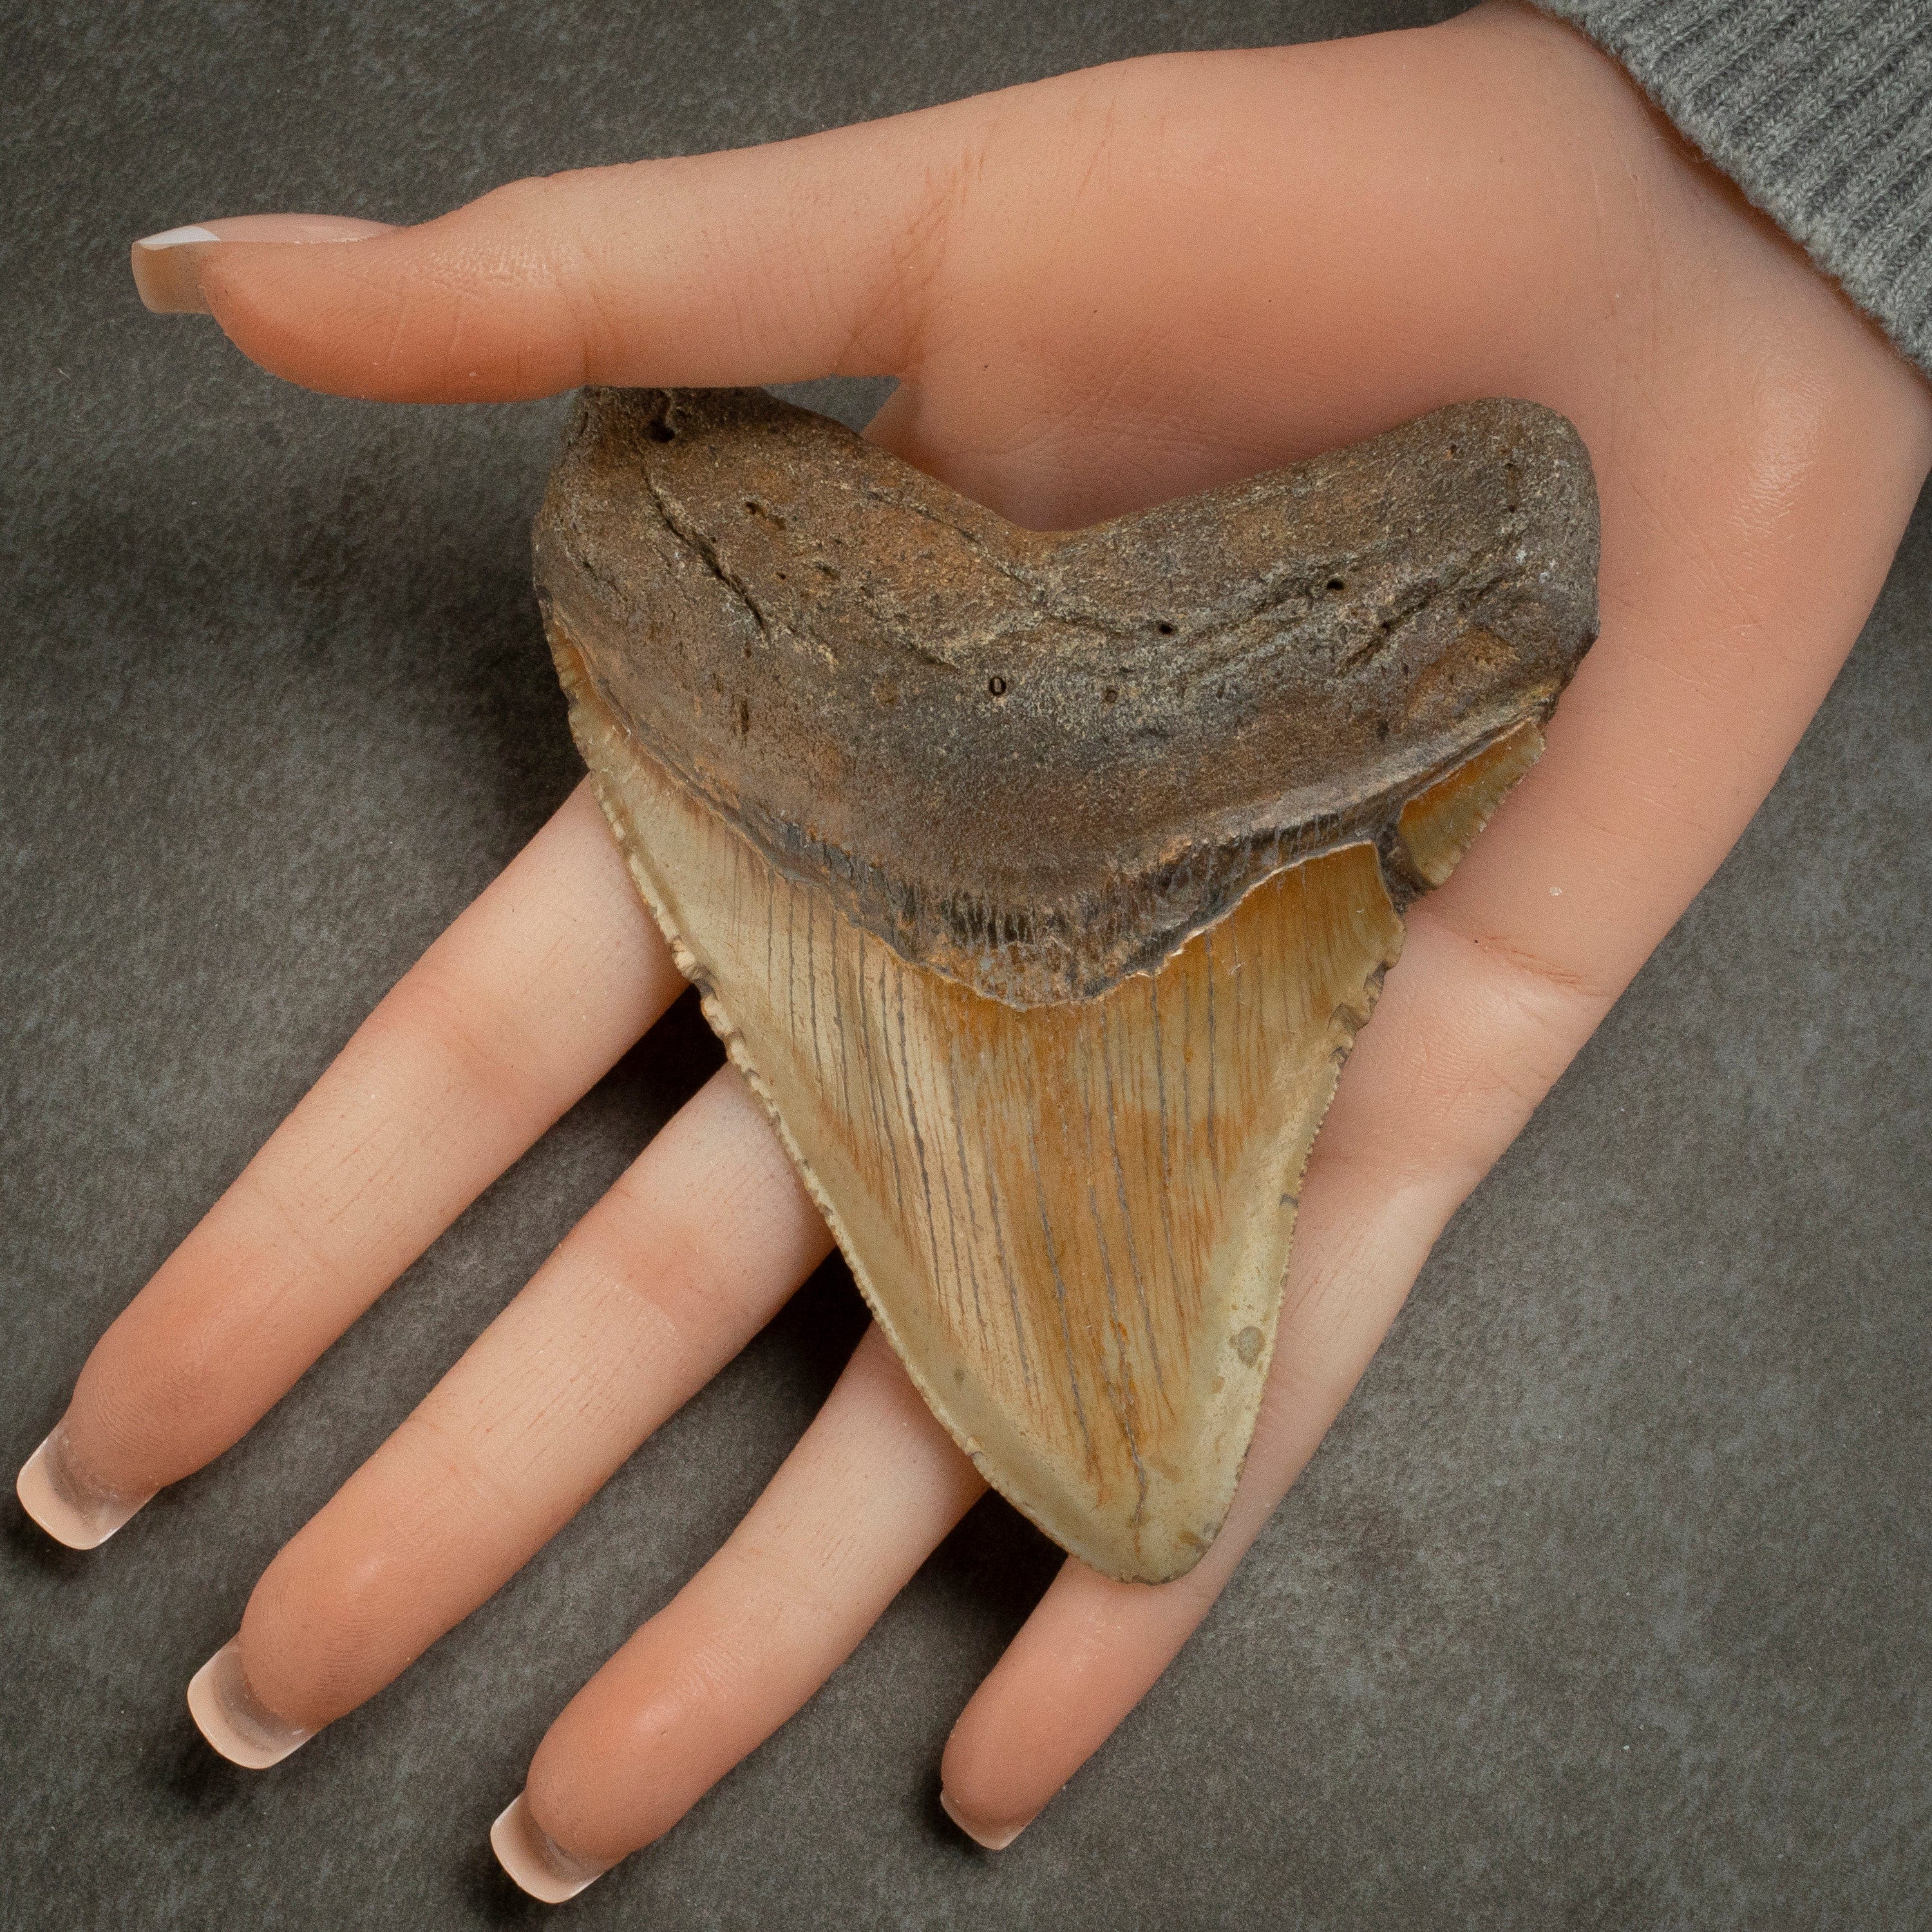 Kalifano Megalodon Teeth Megalodon Tooth from South Carolina - 4.1" ST1600.020